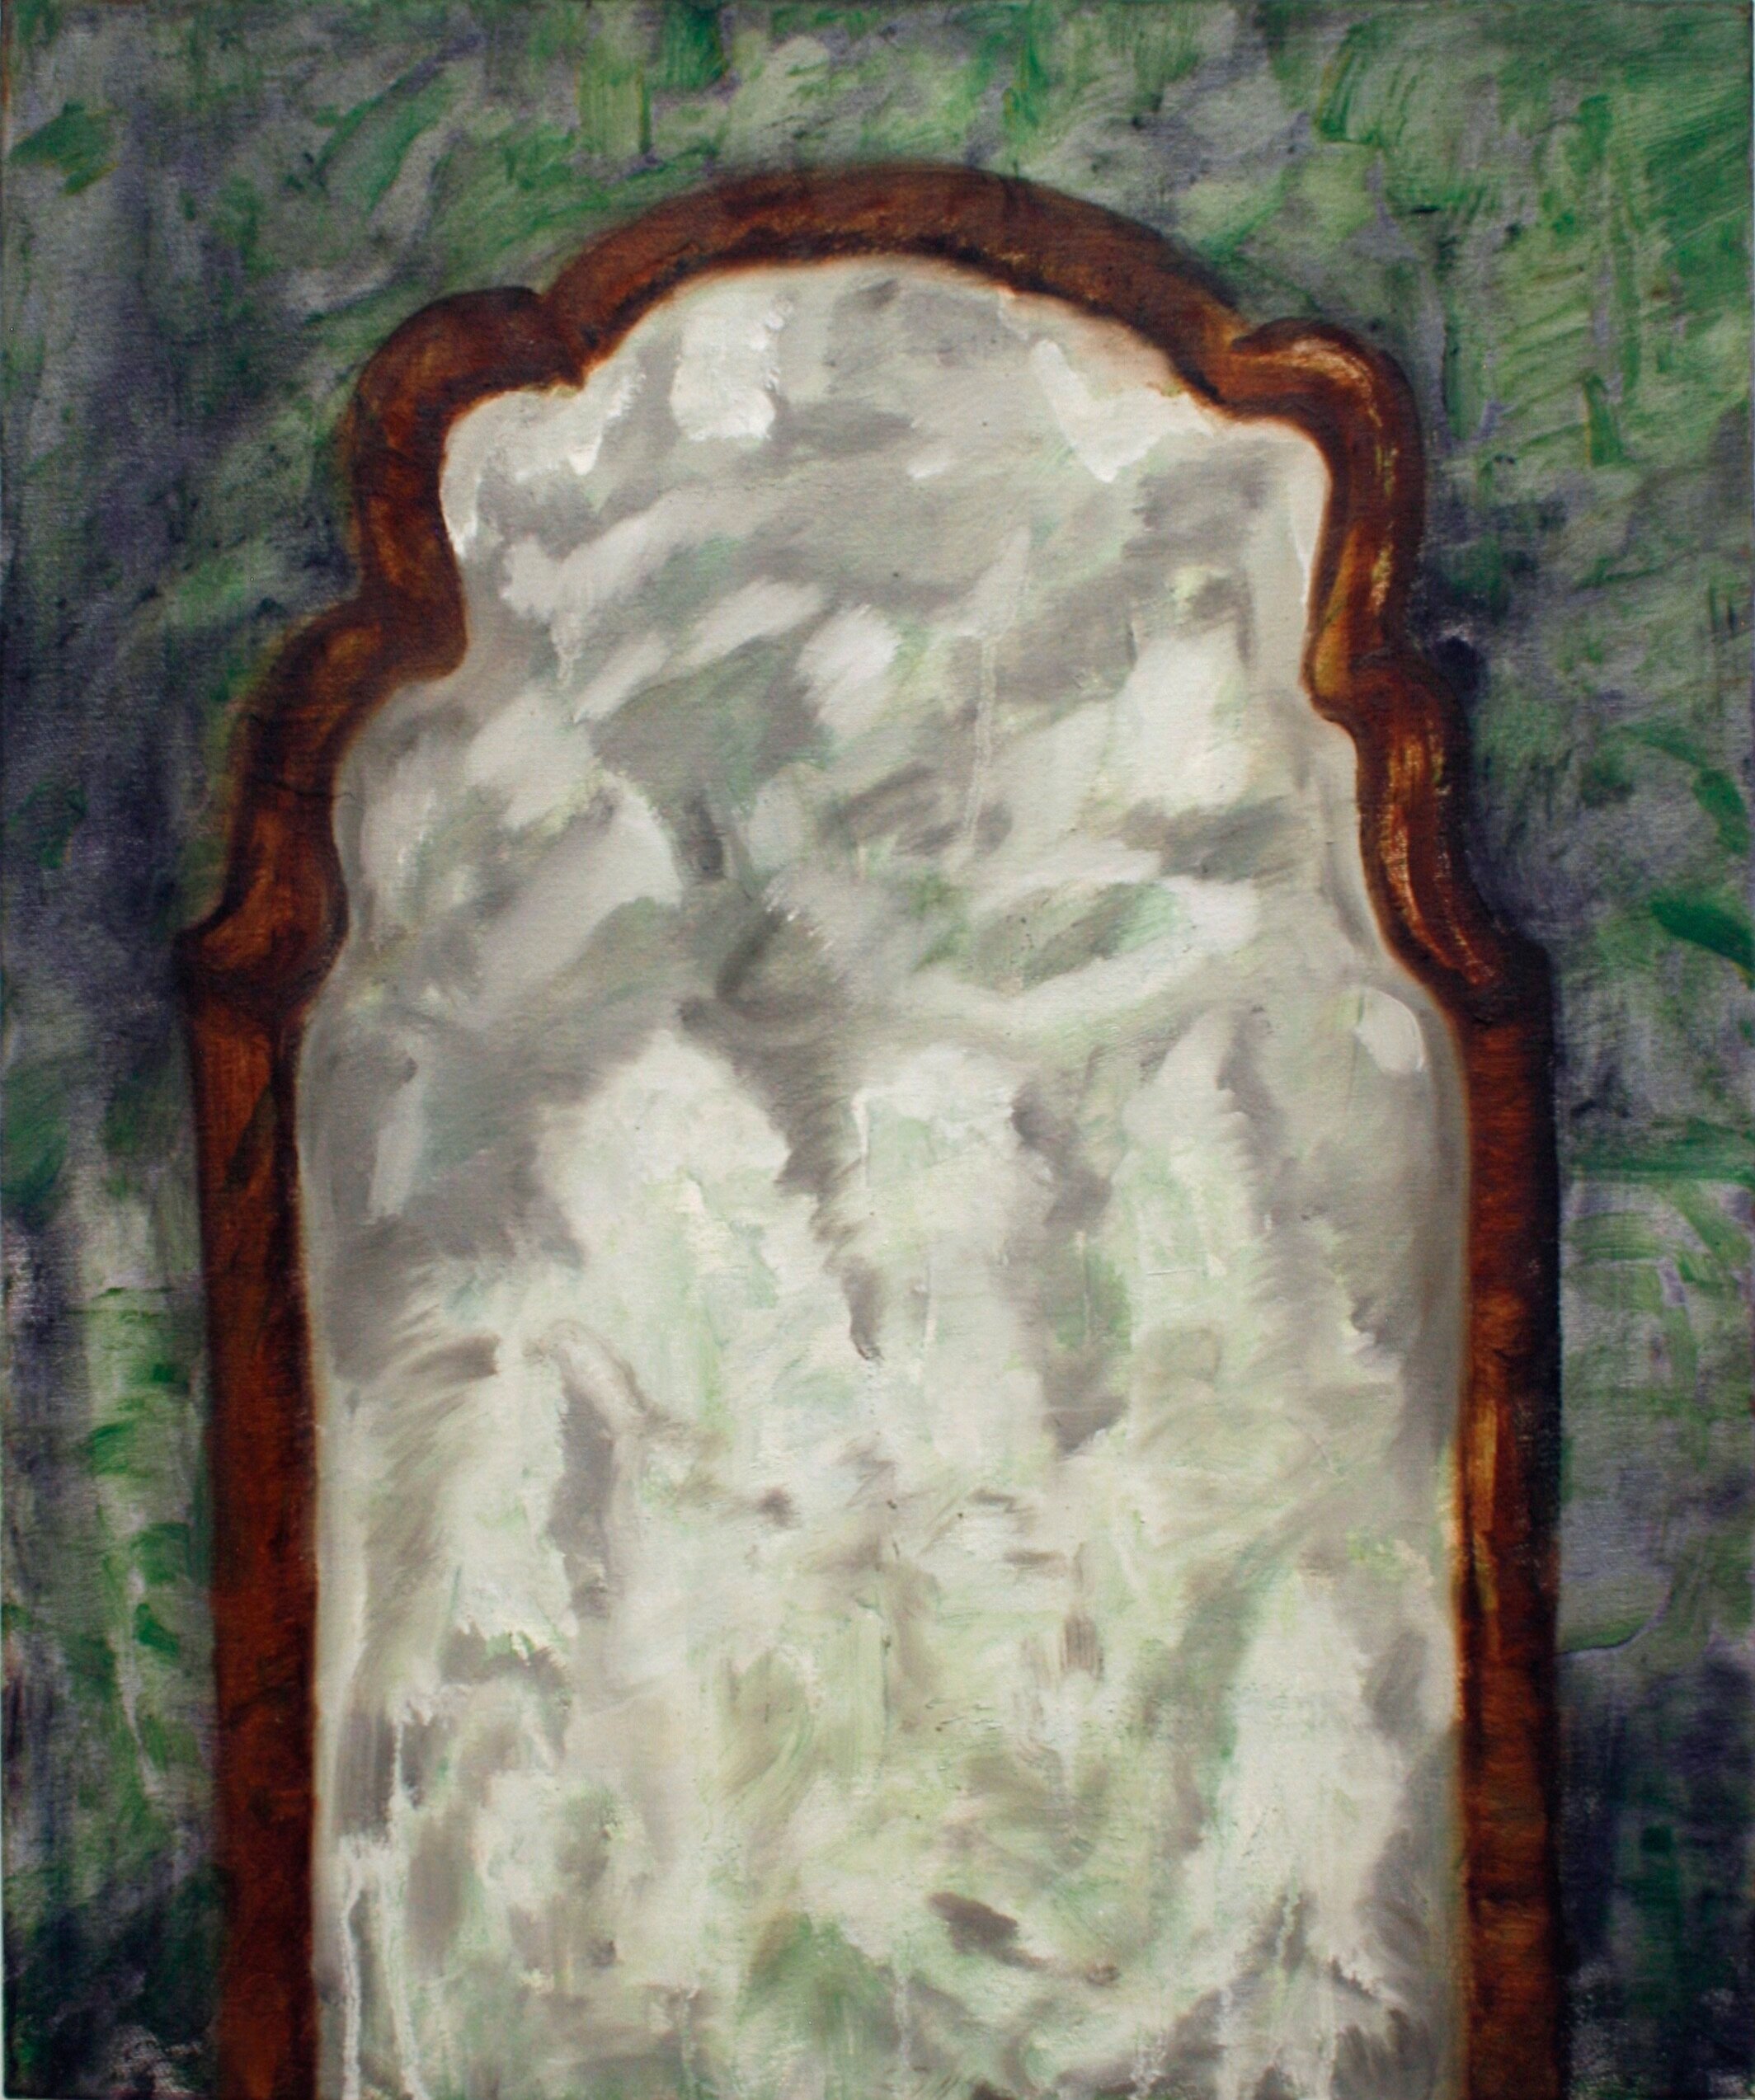 Magic Mirror, Oil on canvas